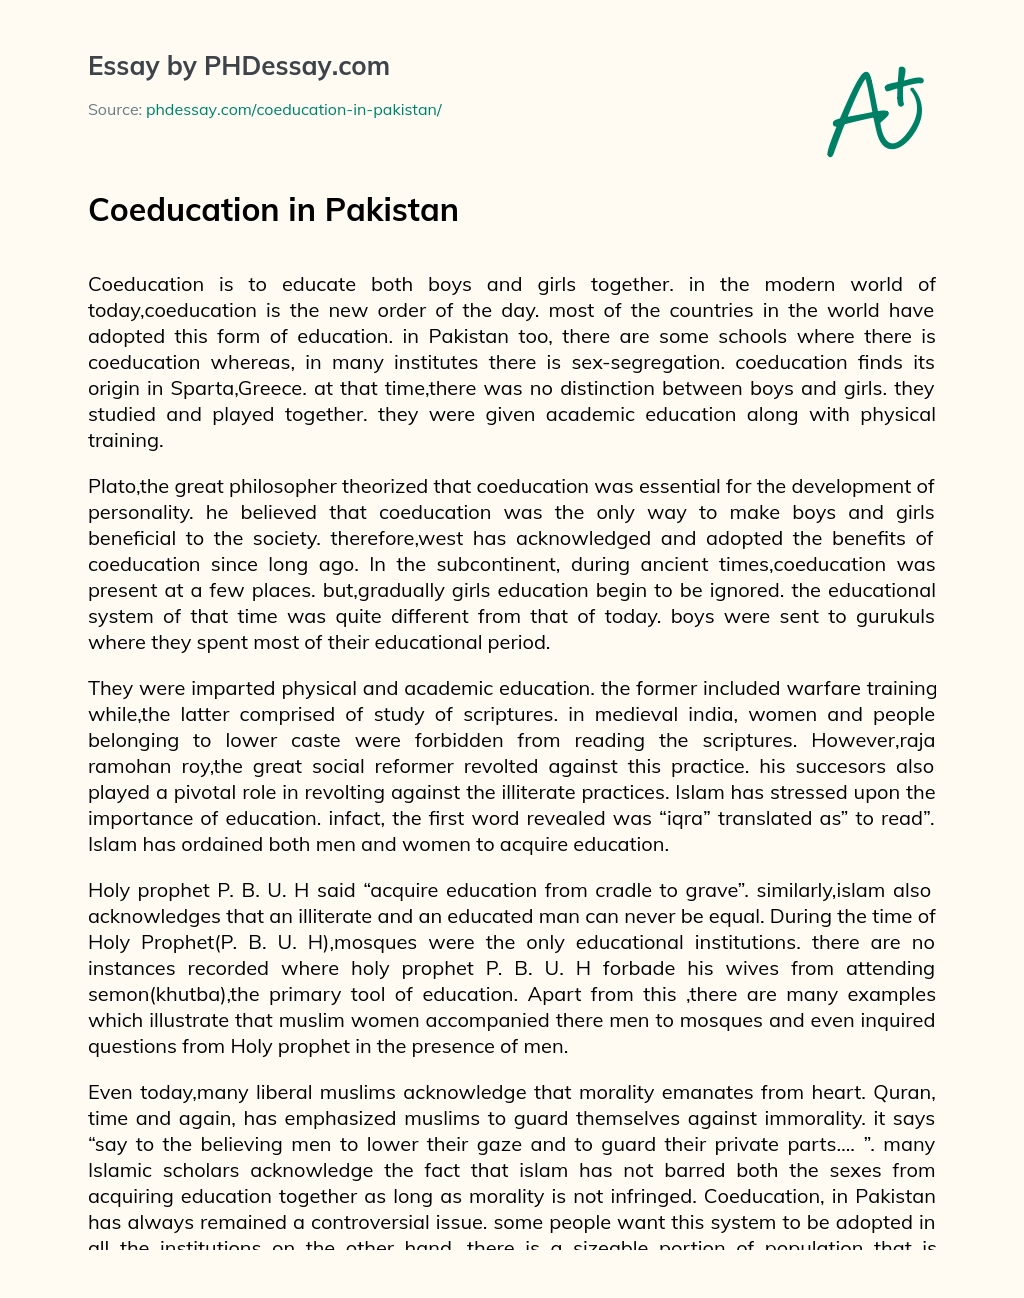 Coeducation in Pakistan essay